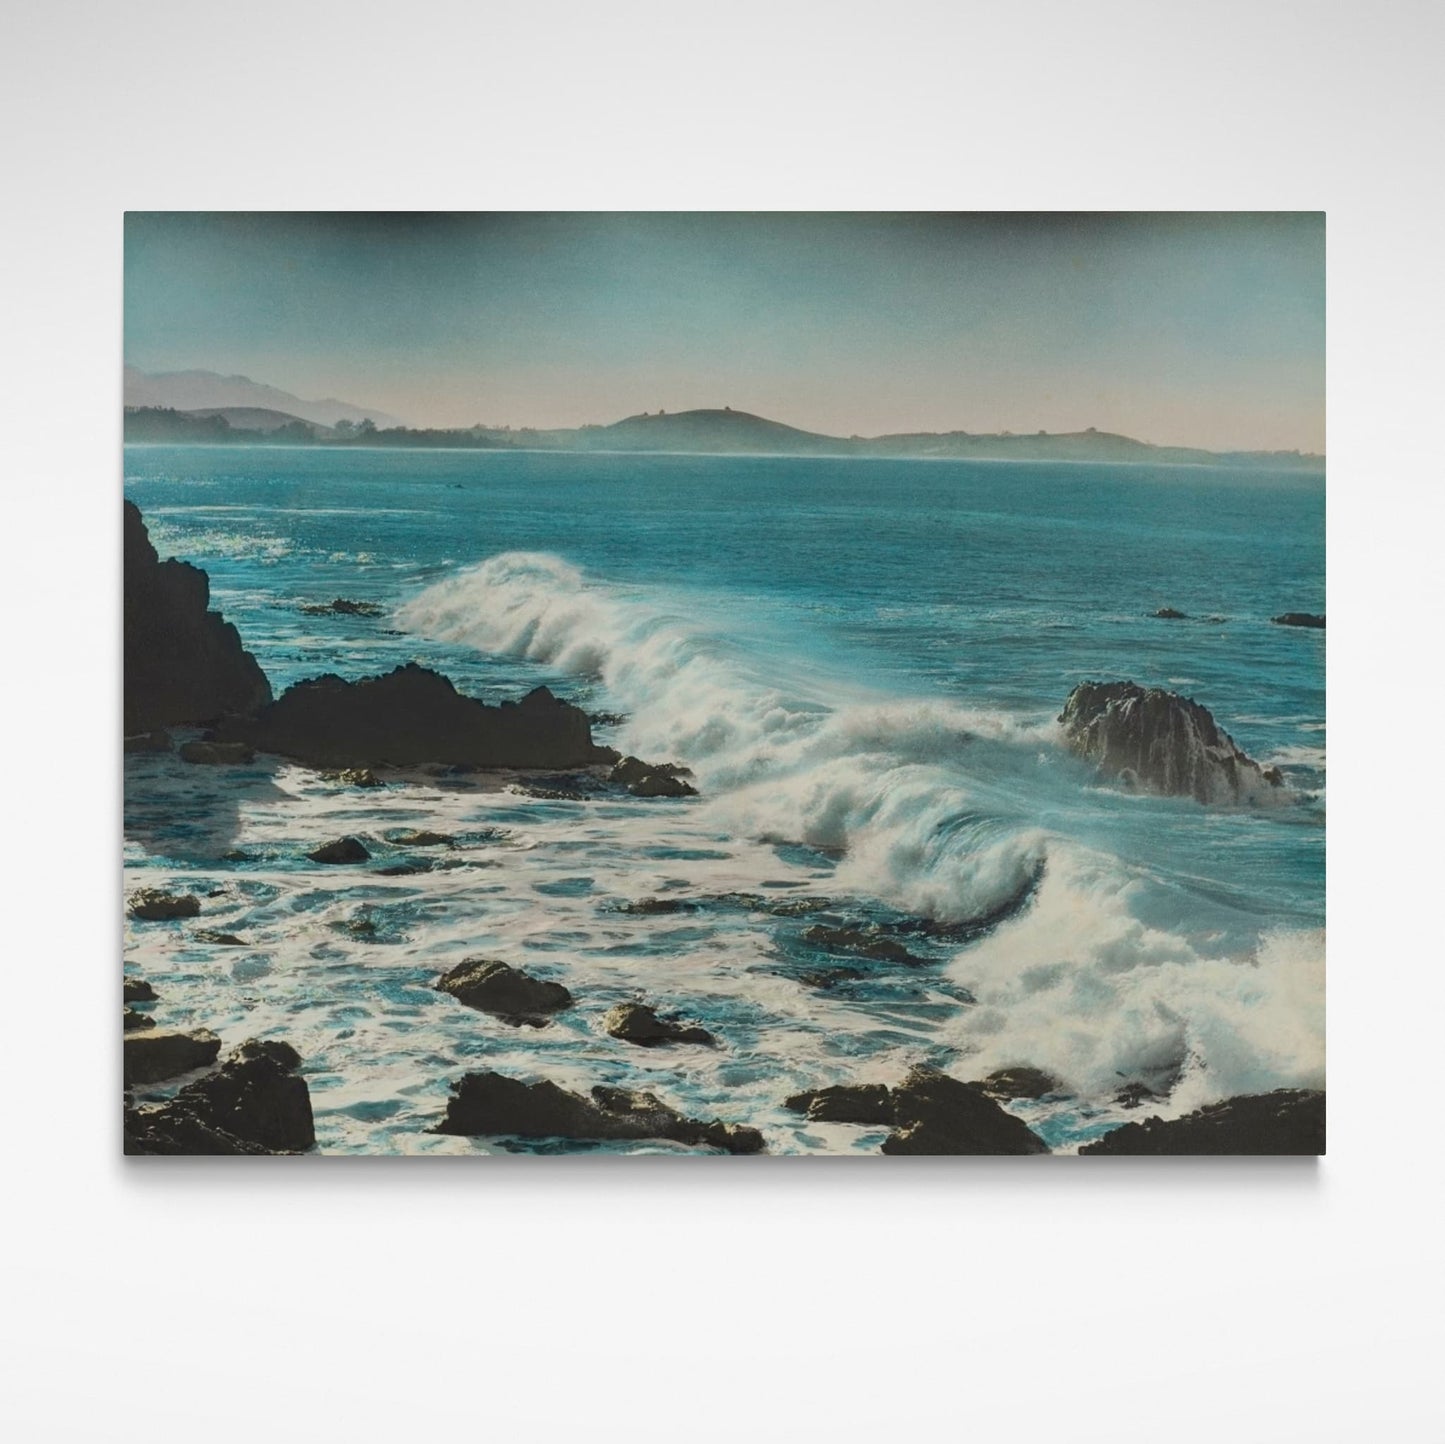 Print of waves breaking on rocky coastline.